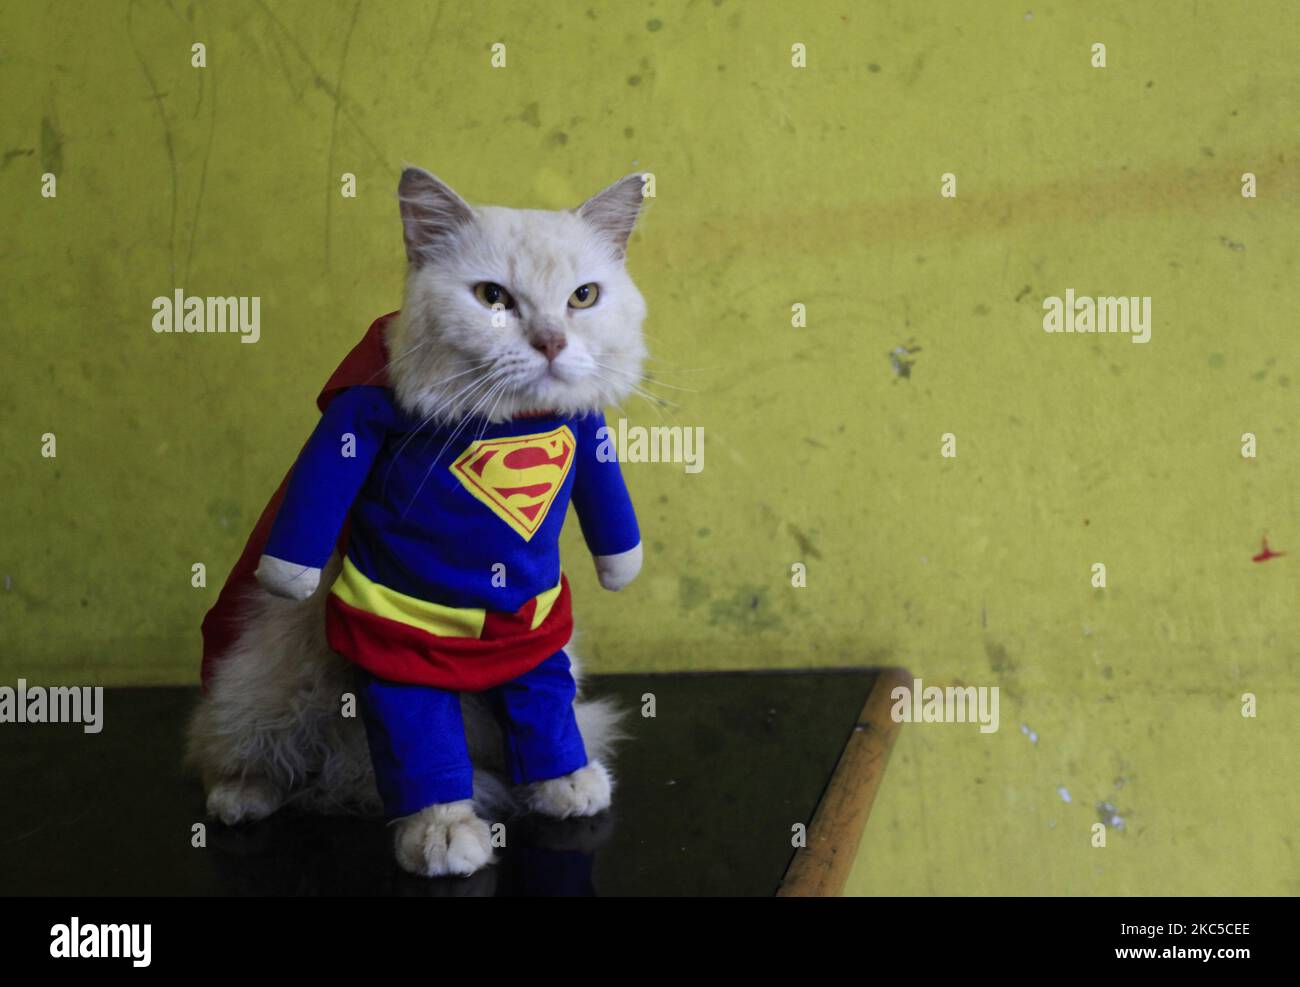 Gato de superman fotografías e imágenes de alta resolución - Alamy